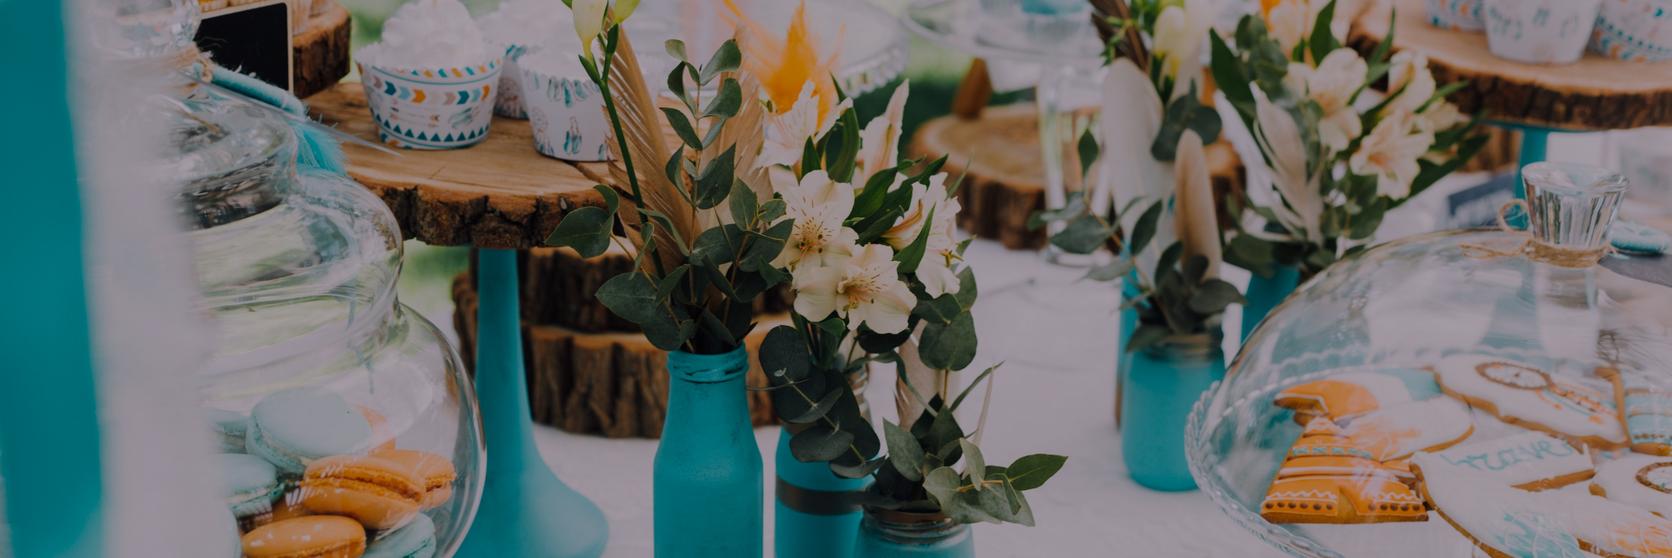 vases-flowers-birthday-table-arrangements